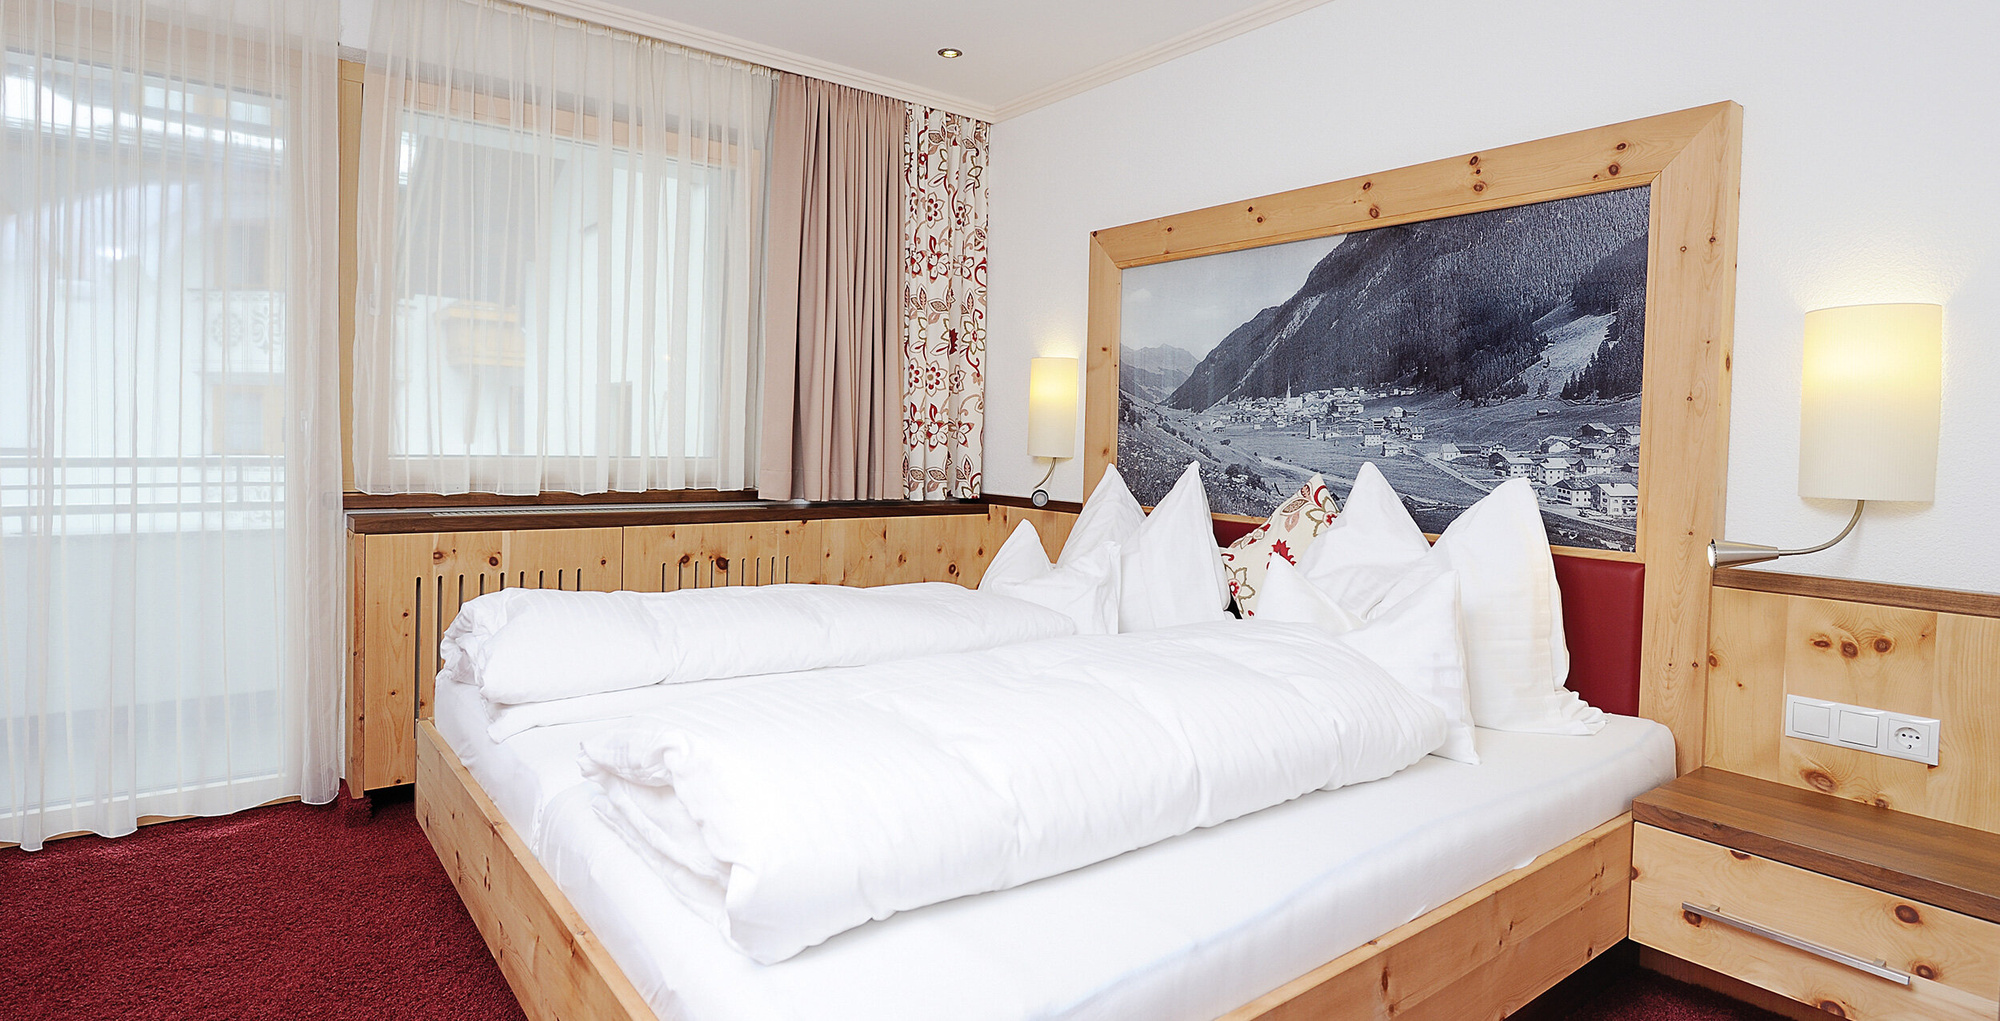  Double room Hotel Garni Kristall in Ischgl